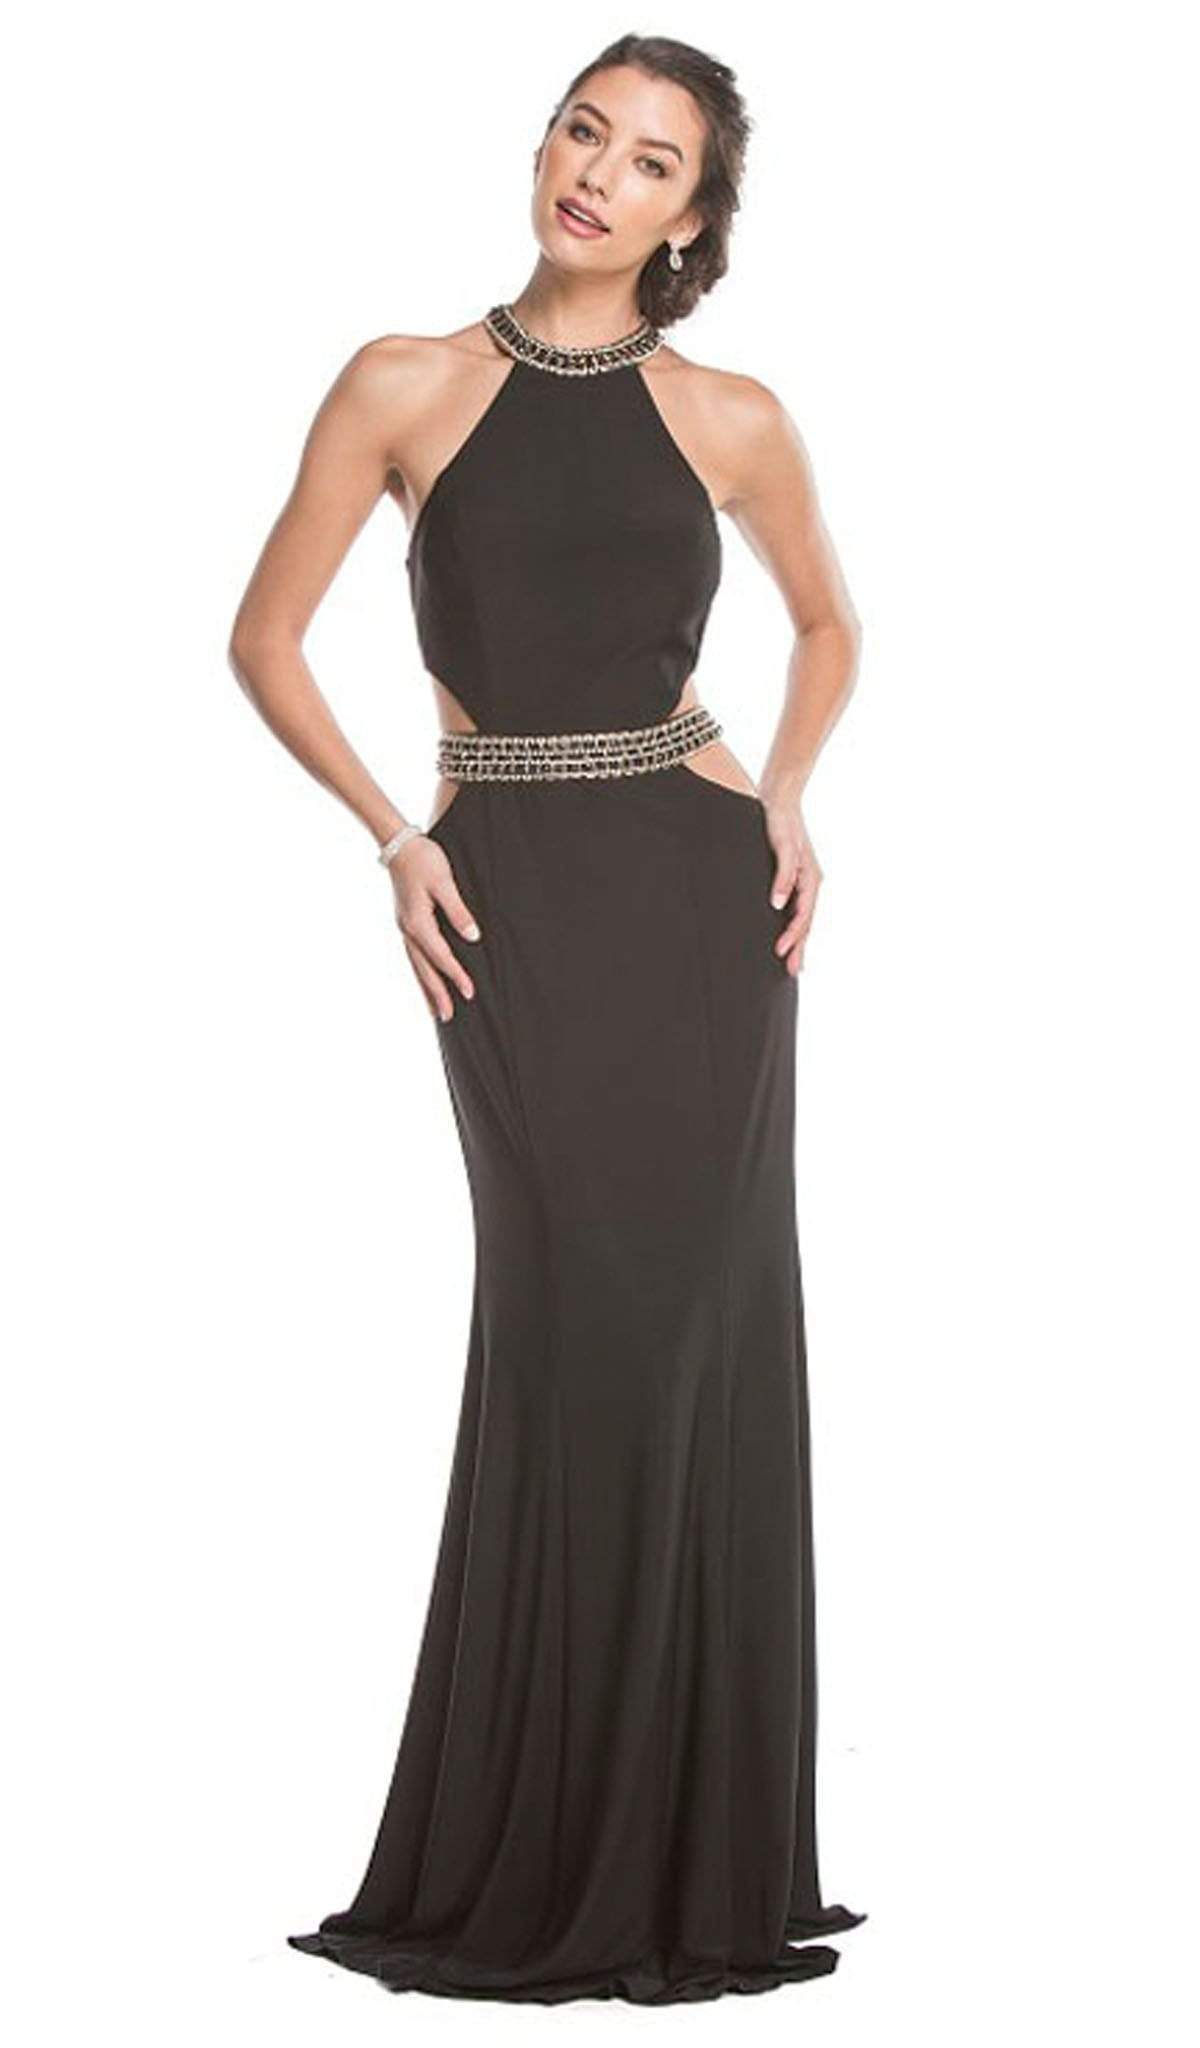 Image of Aspeed Design - Bedazzled Halter Neck Prom Dress